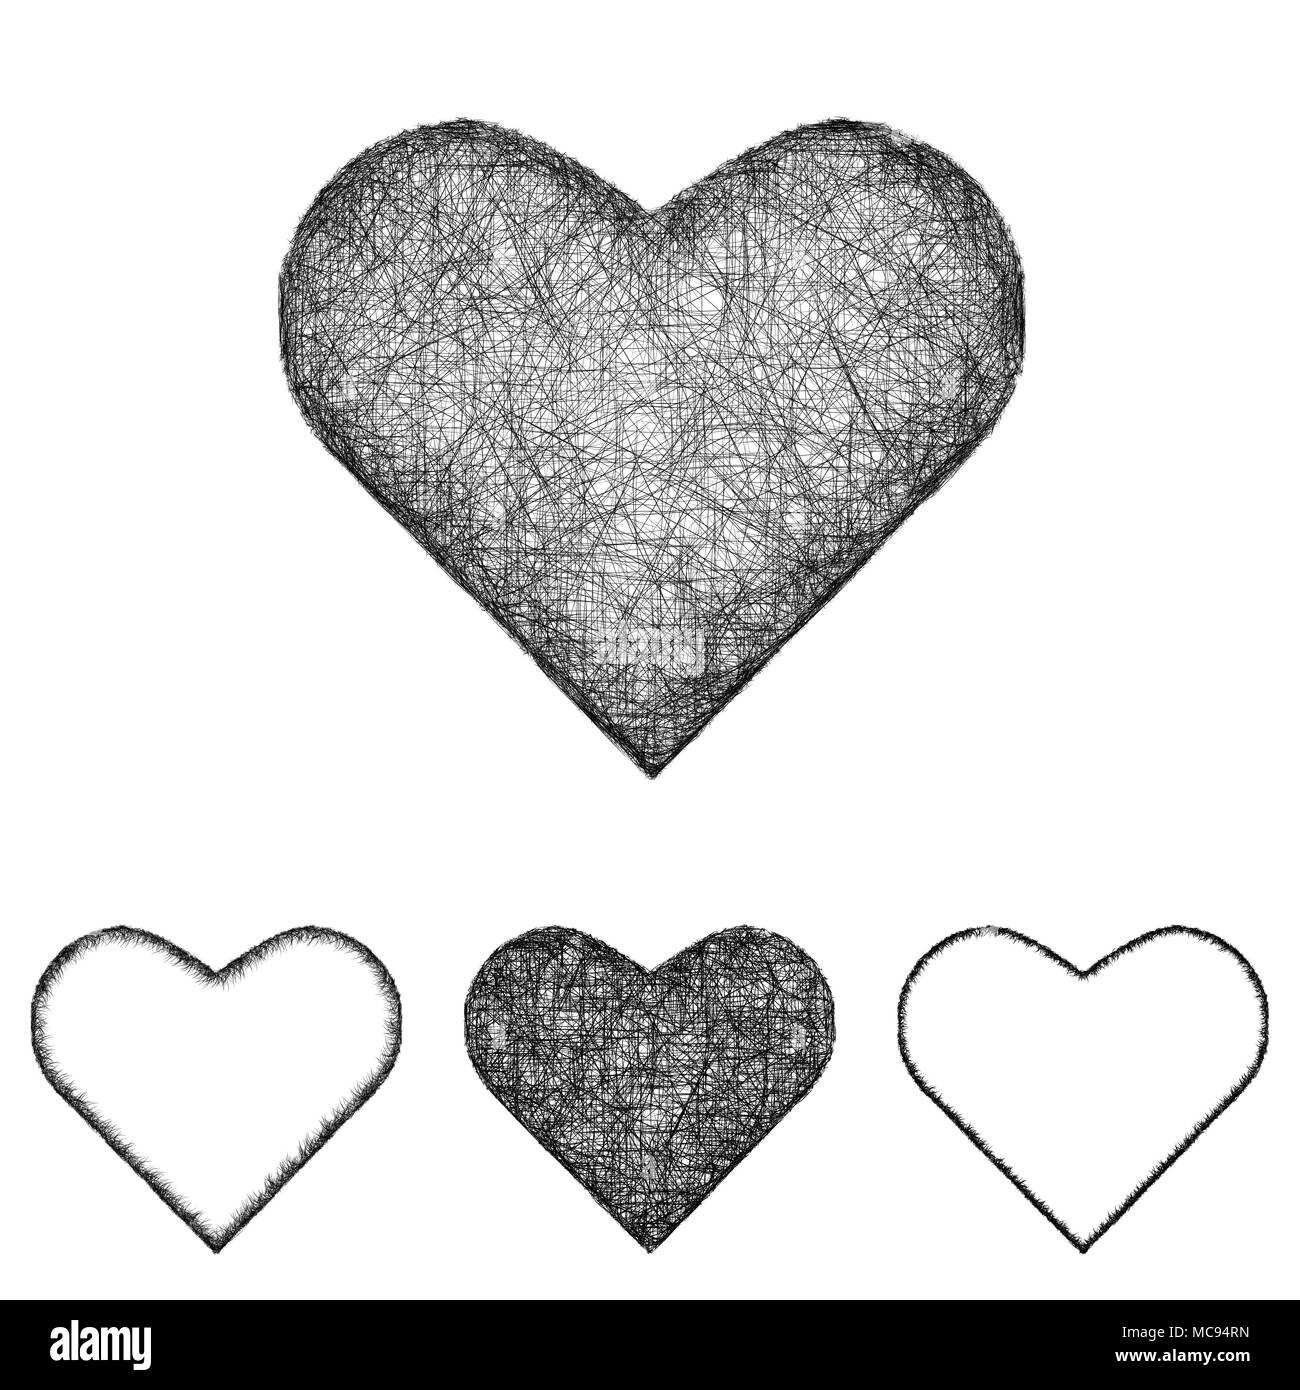 Hands making heart symbol sketch engraving vector illustration romantic  love lovesickness symbol tshirt apparel print  CanStock